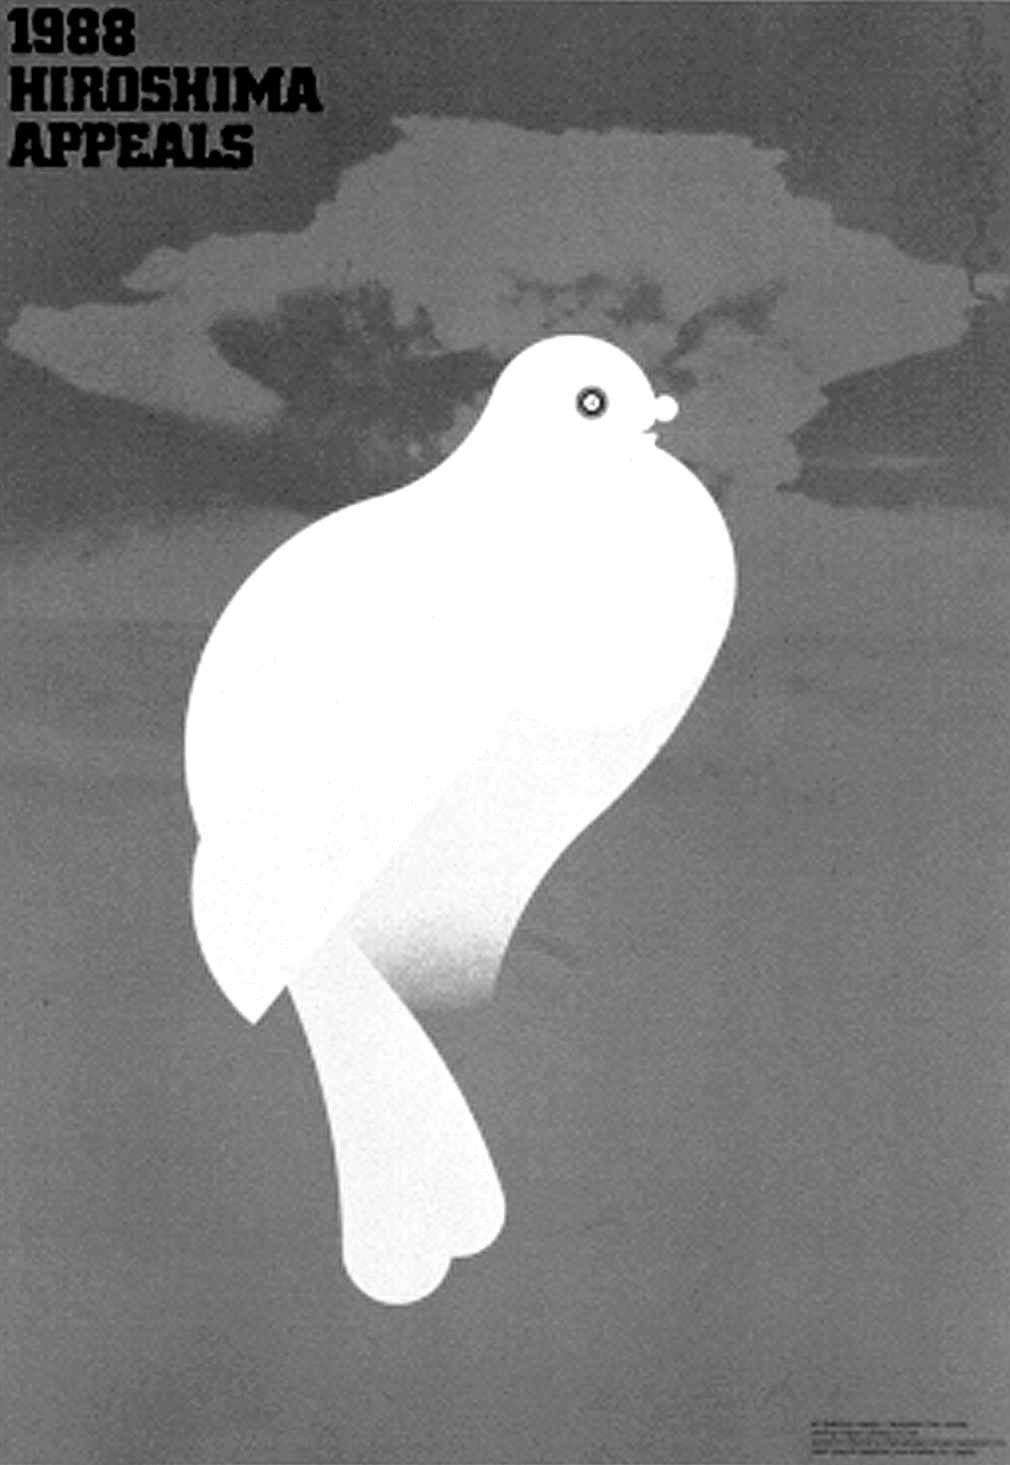 Ikko Tanaka, Plakat ‘Hiroshima Appeals‘, 1988, Foto: Bauhaus-Archiv Berlin